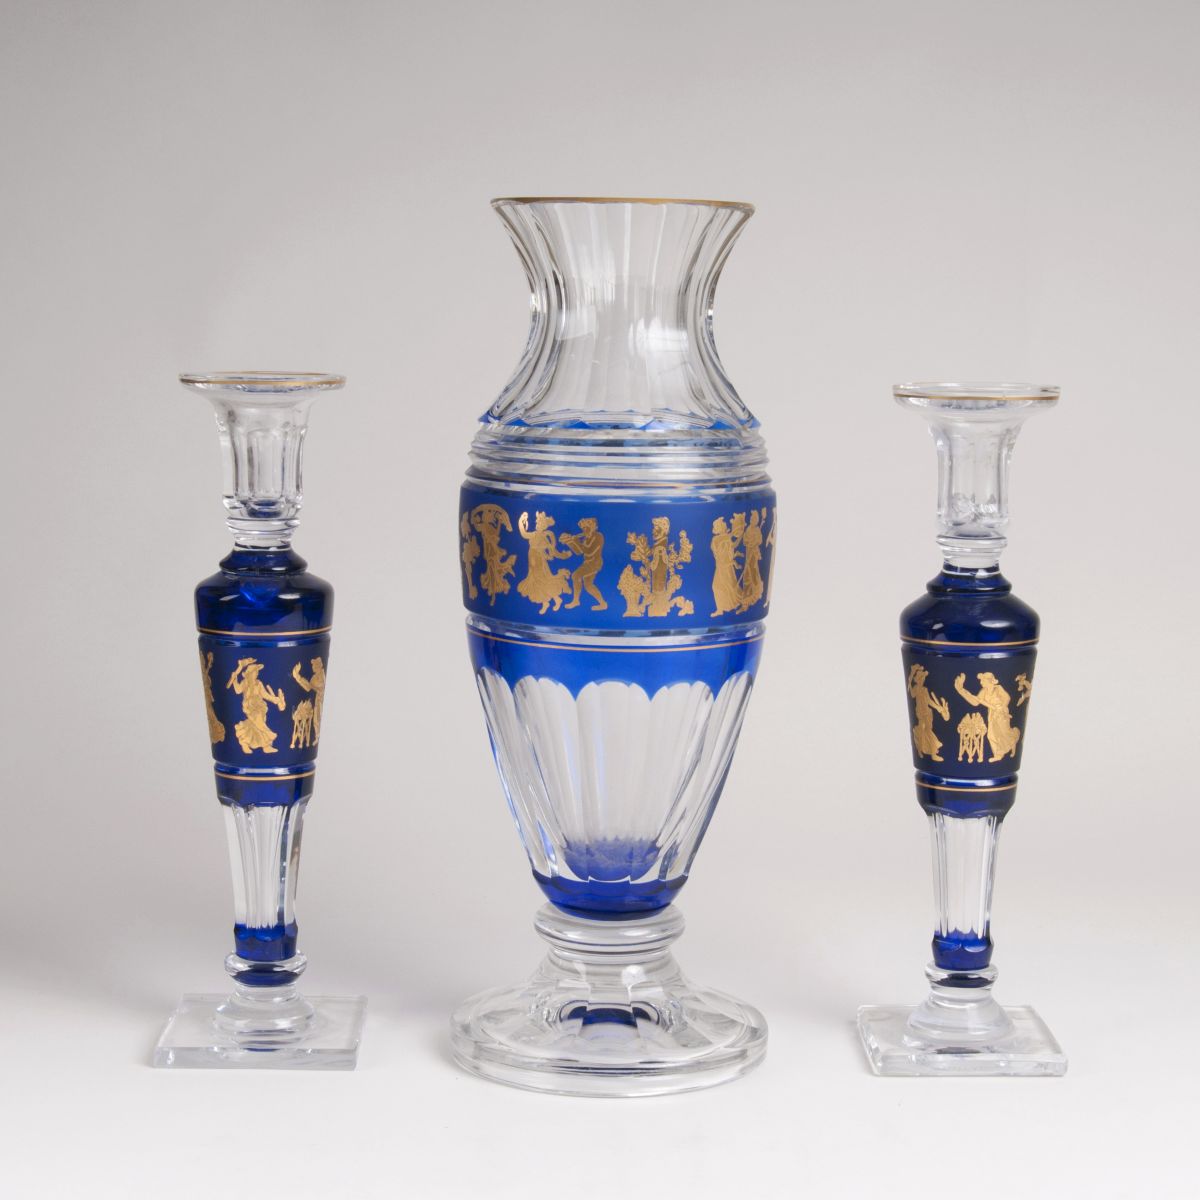 A 'Périclès' vase and pair of candlesticks from the series 'Danse de flore'